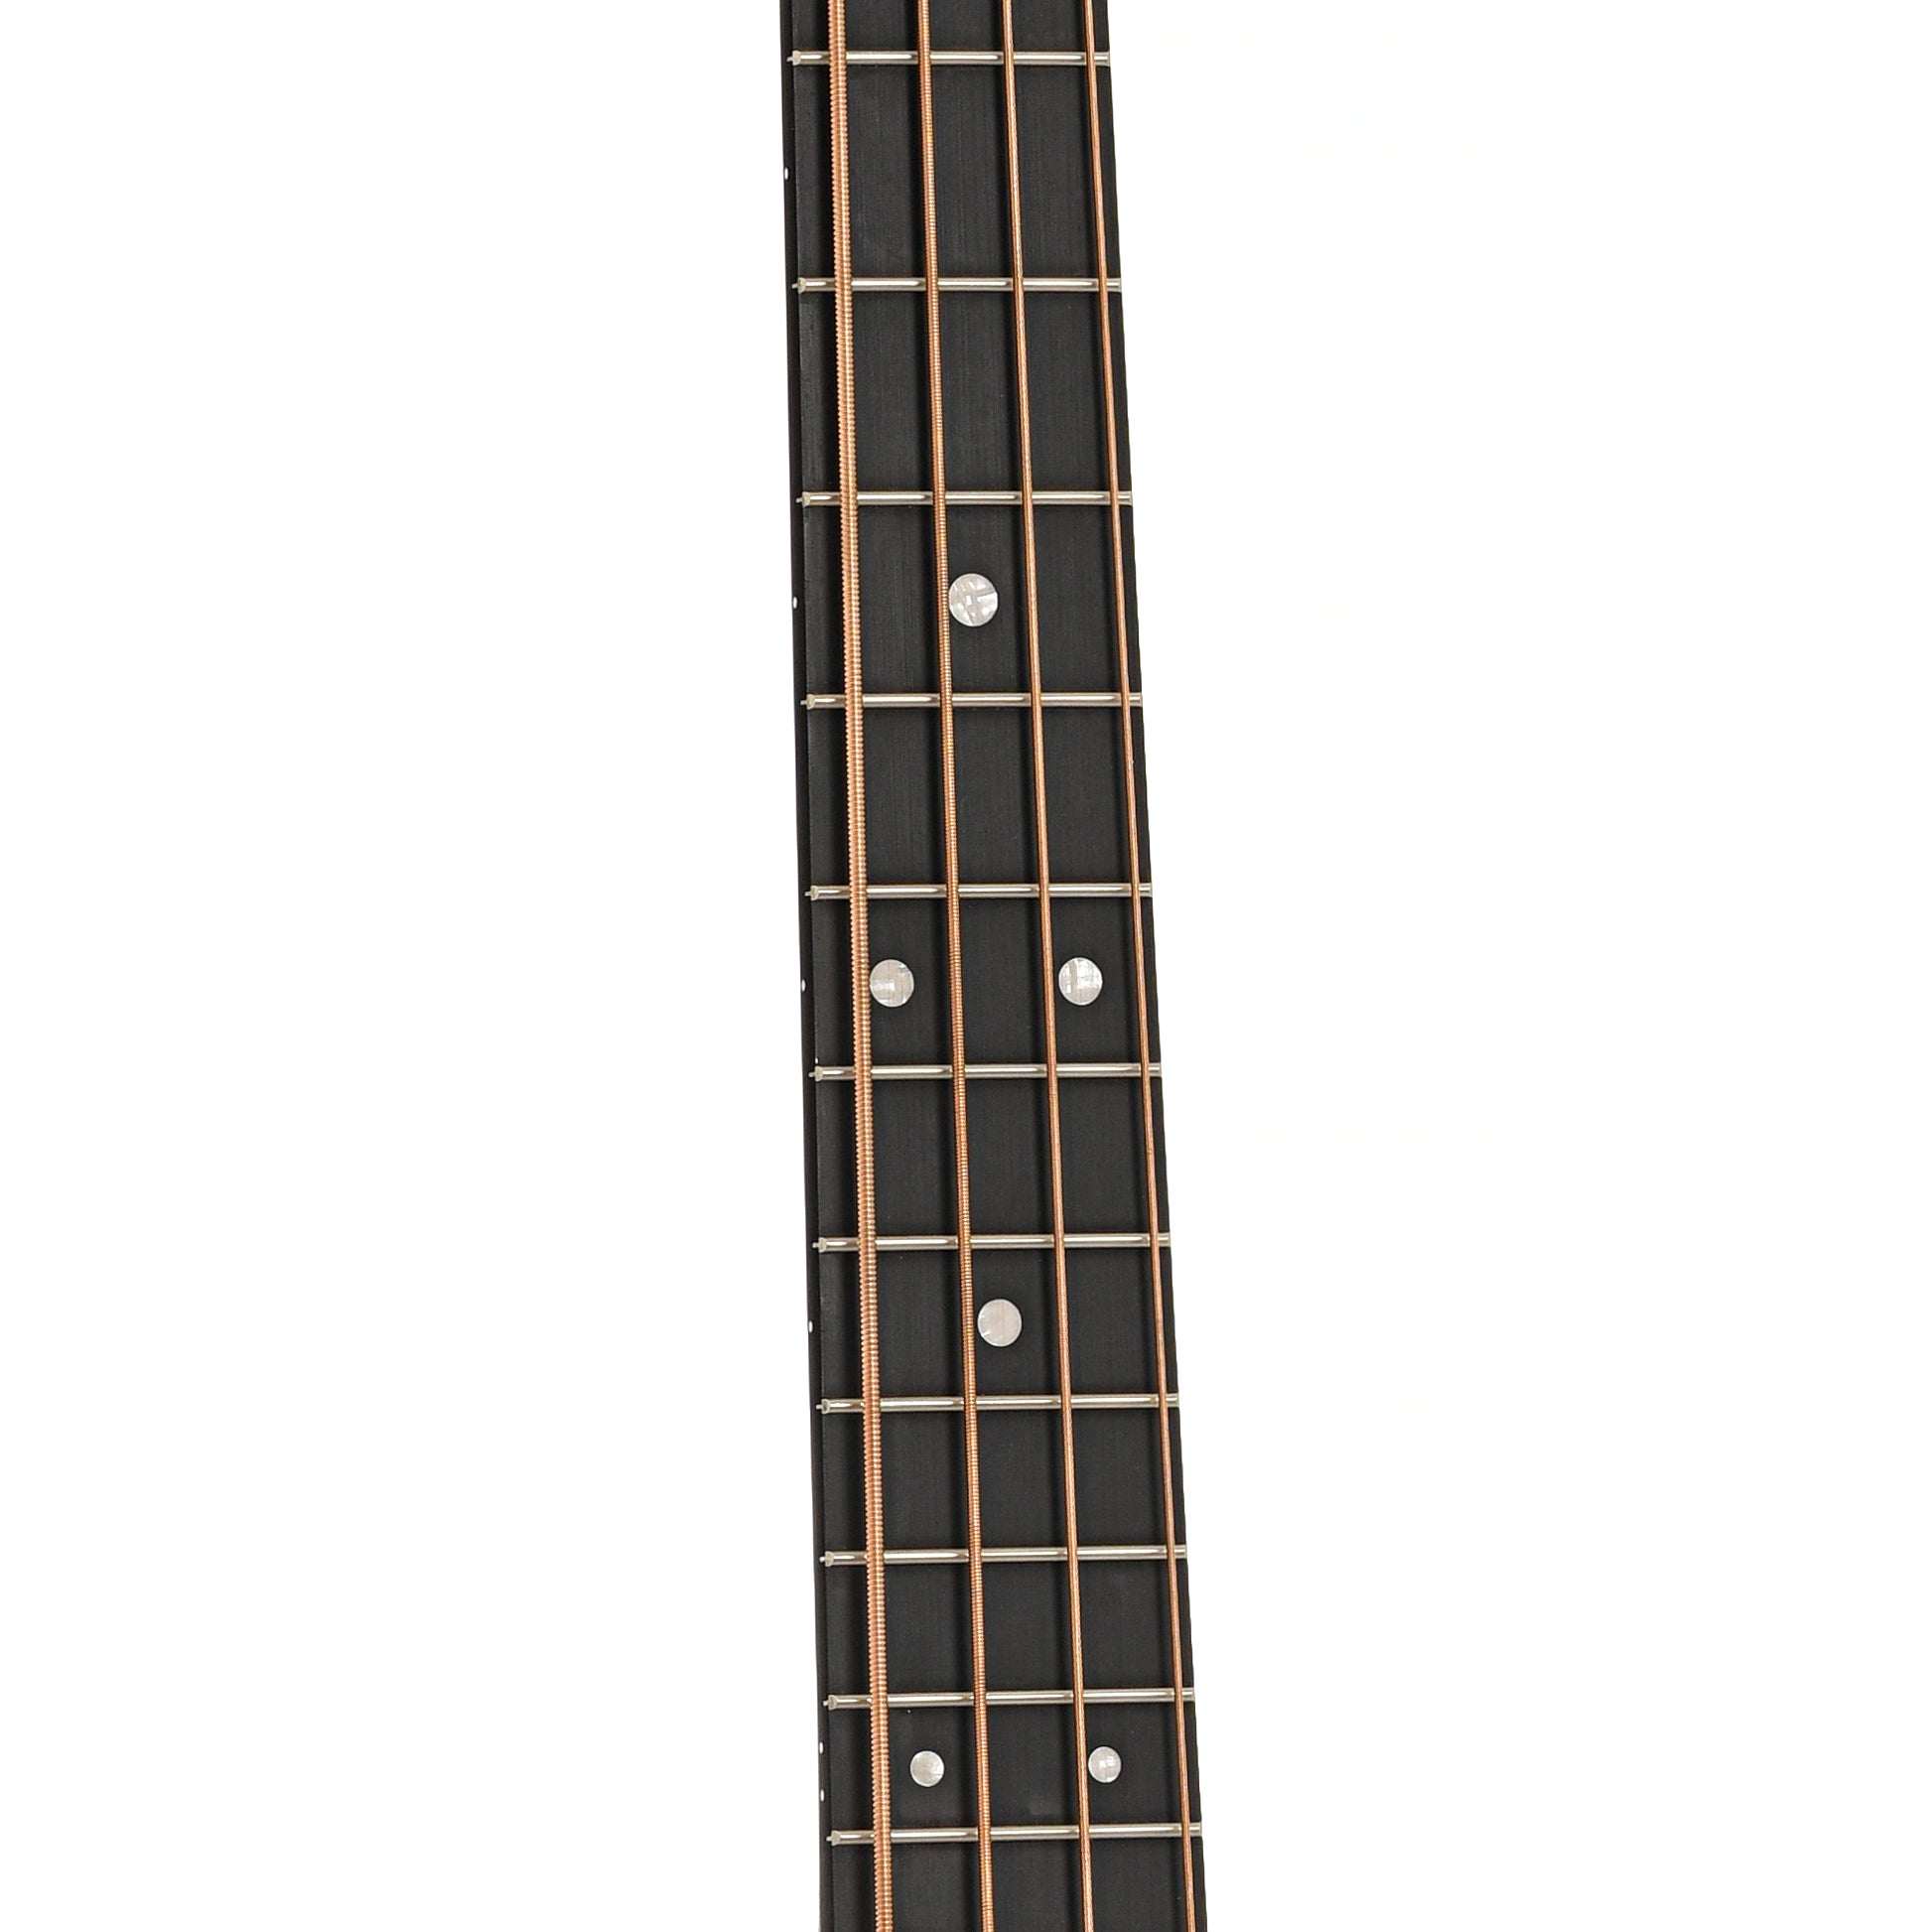 Fretboard of Martin DJR-10E Acoustic Bass Guitar